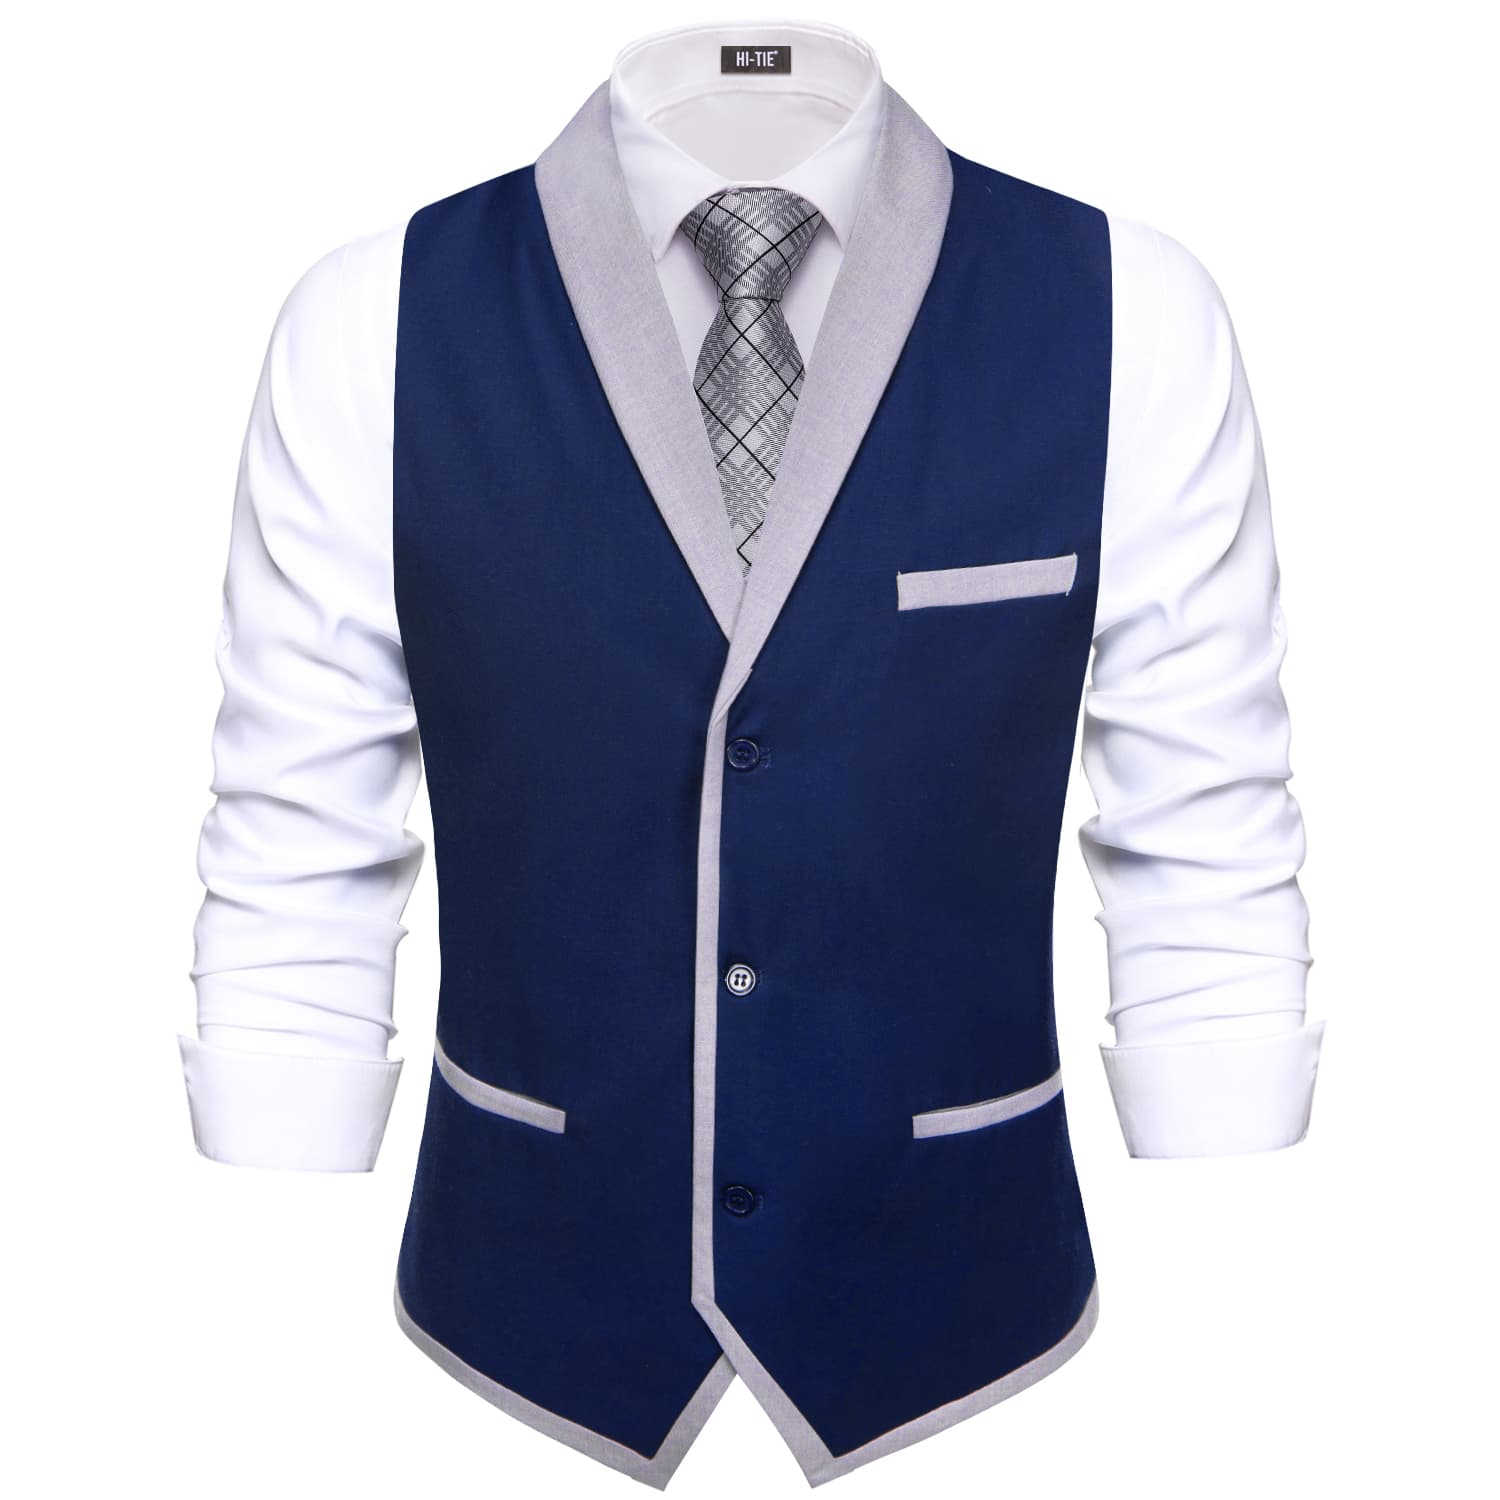 LightGrey Shawl Collar Dark Blue Solid Waistcoat Formal Vests for Business